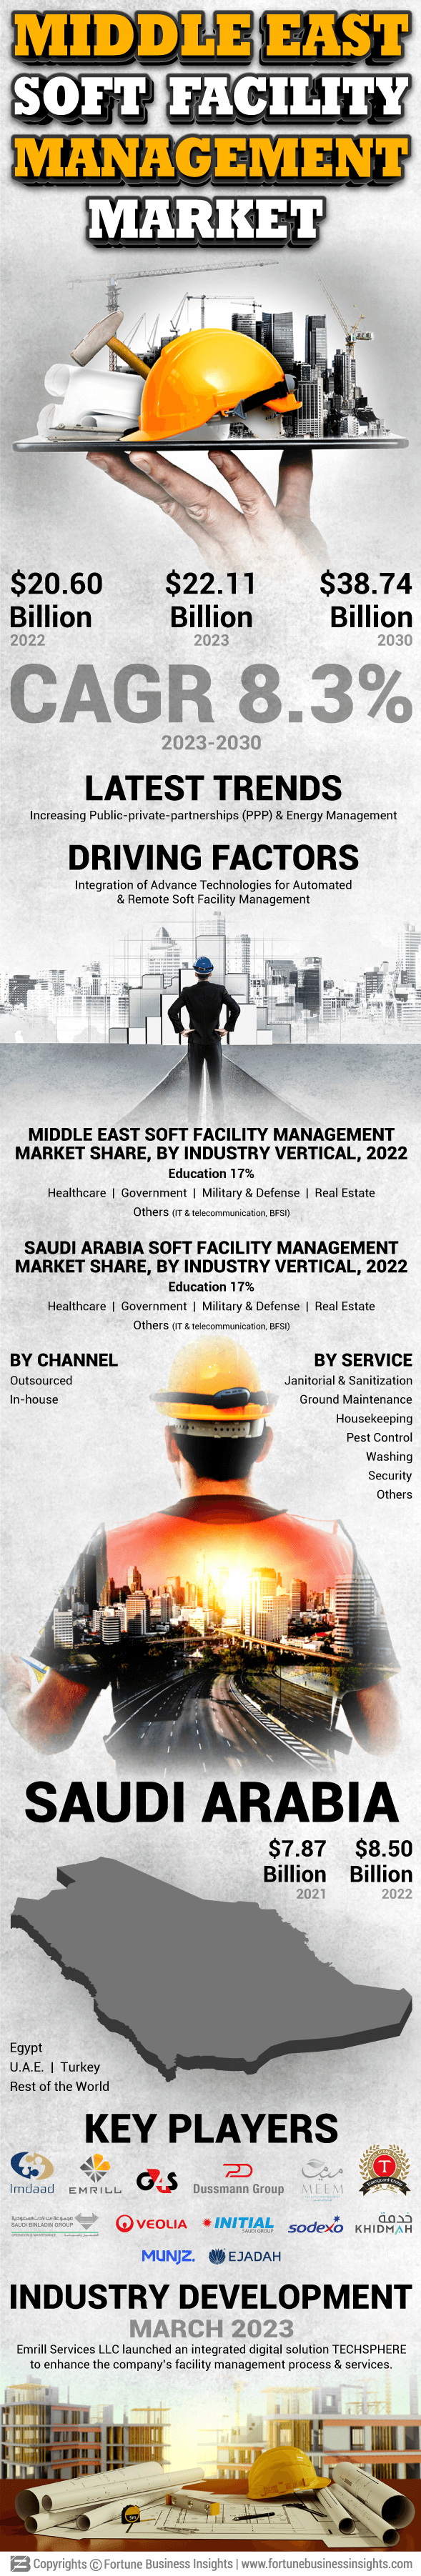 Middle East Soft Facility Management Market